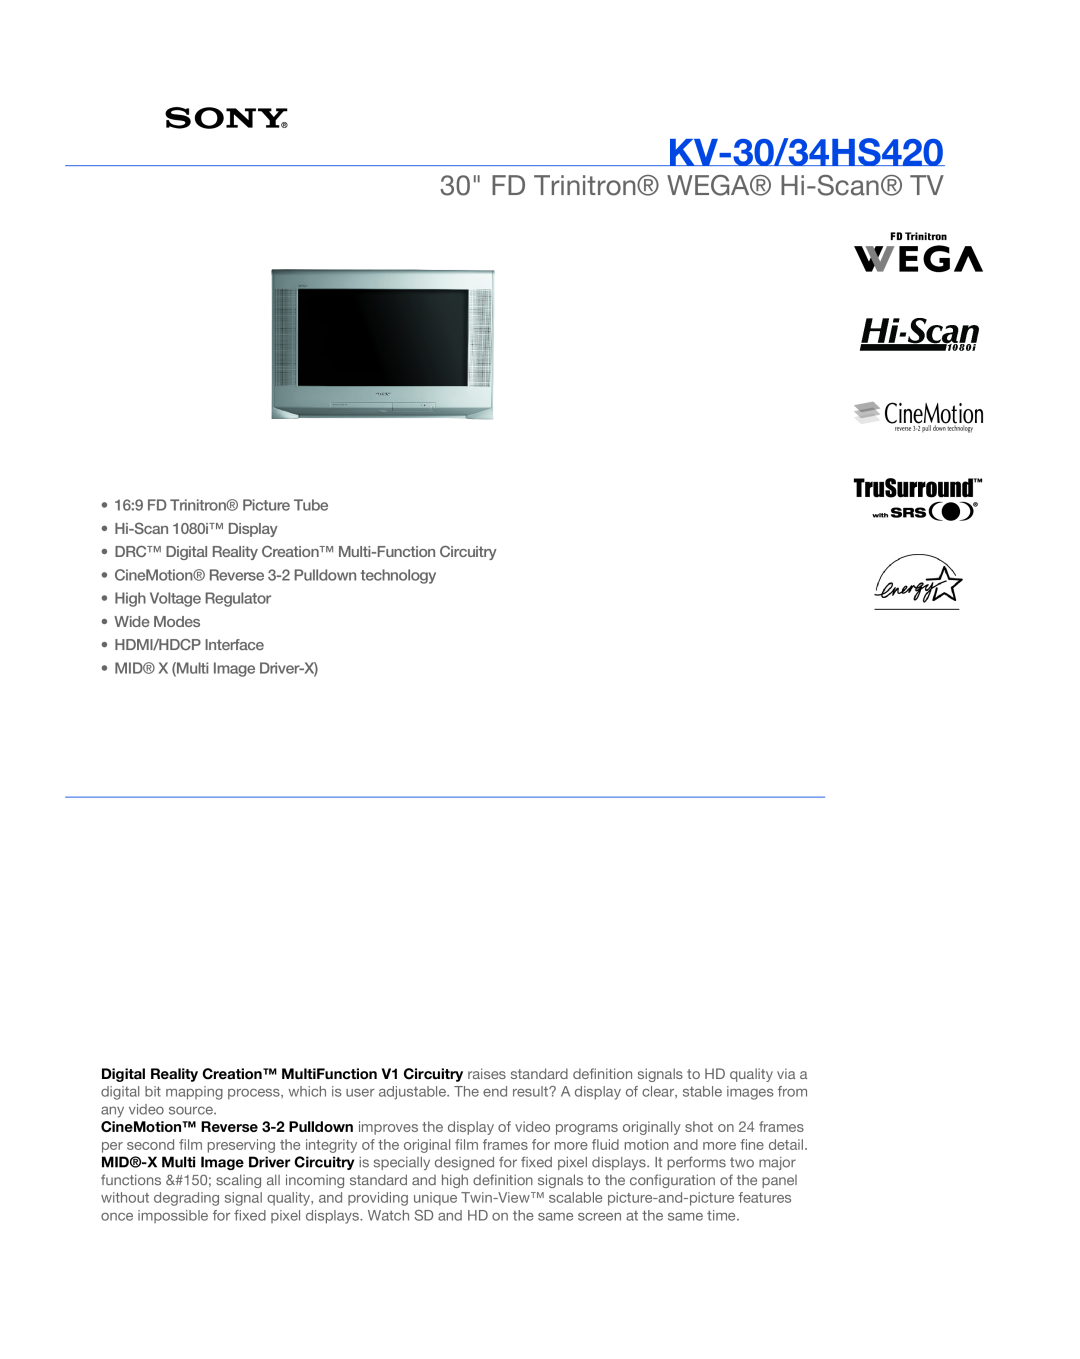 Sony KV-34HS420 manual KV-30/34HS420, FD Trinitron WEGA Hi-Scan TV, FD Trinitron Picture Tube Hi-Scan 1080i Display 